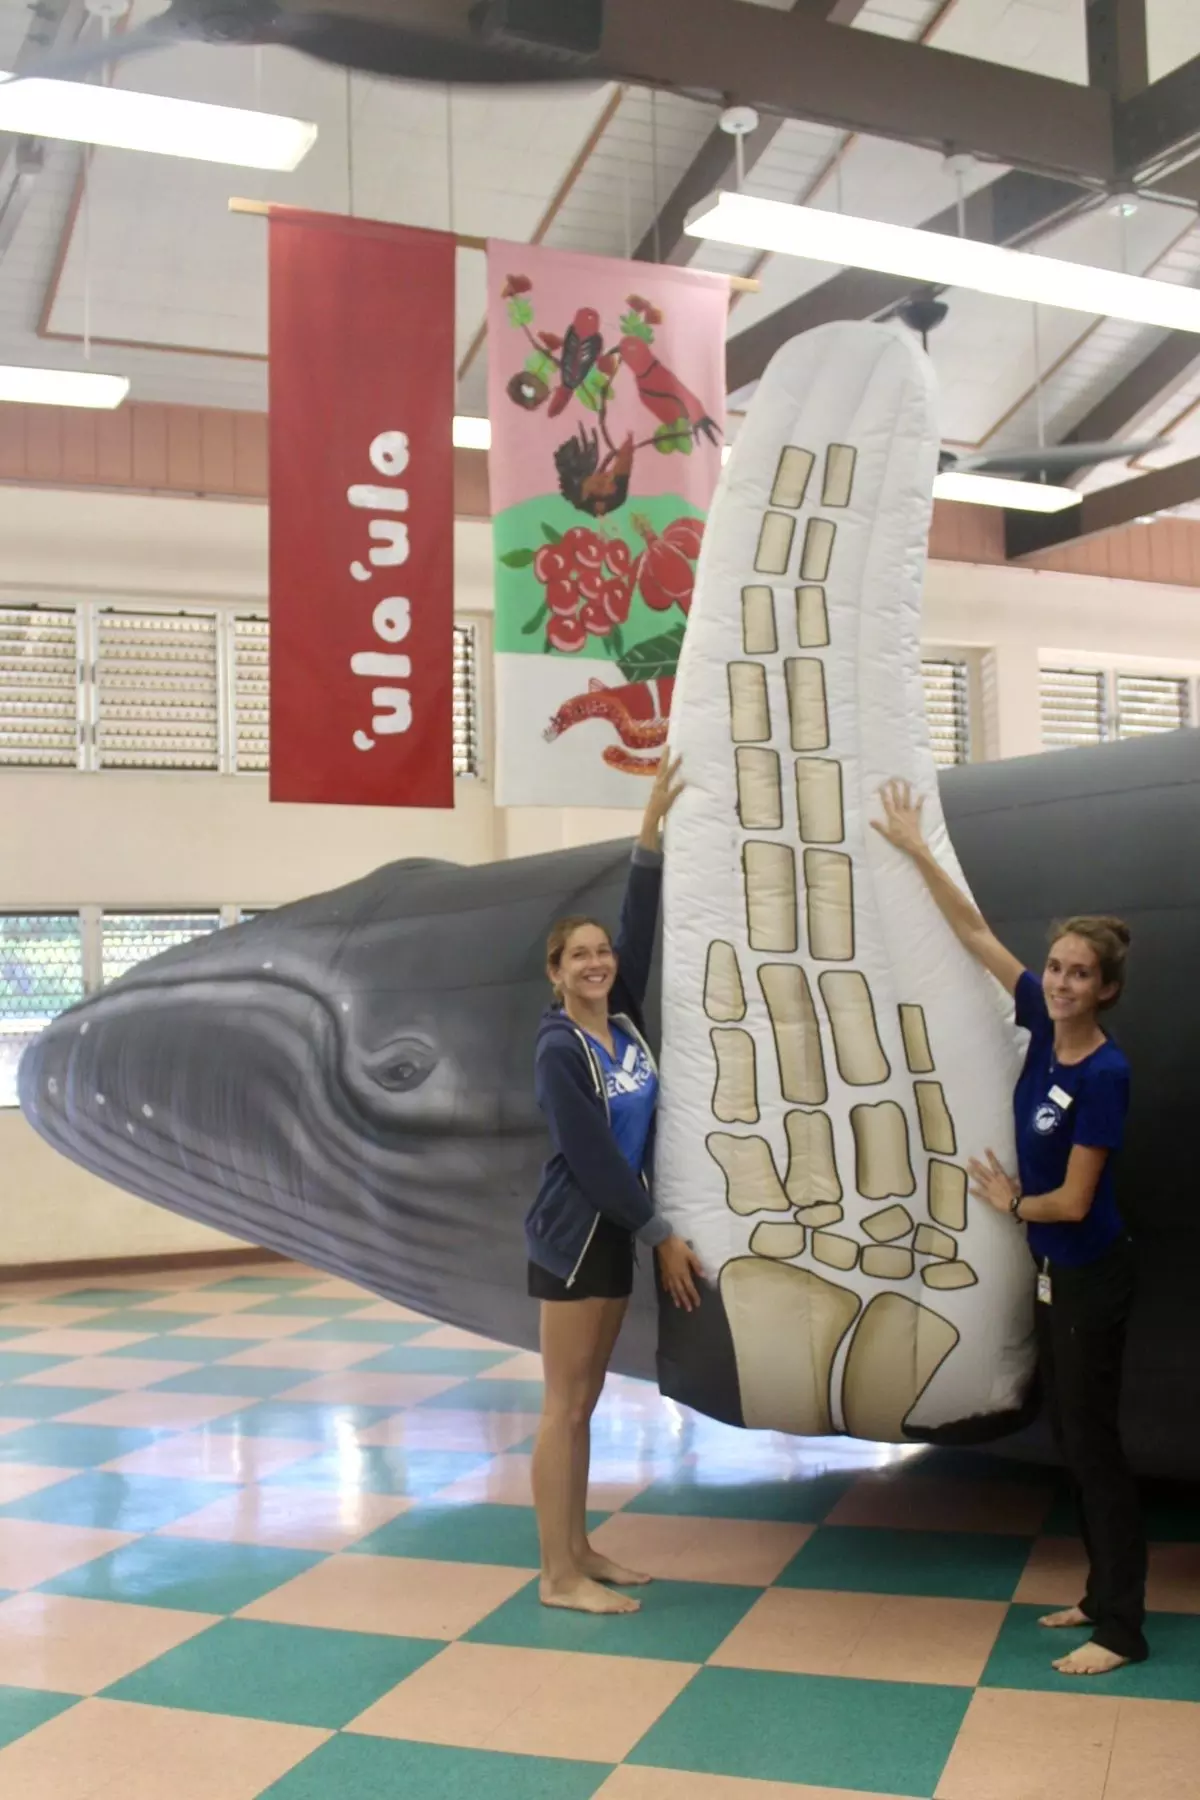 Giant inflatable whale exhibit in exhibit of school